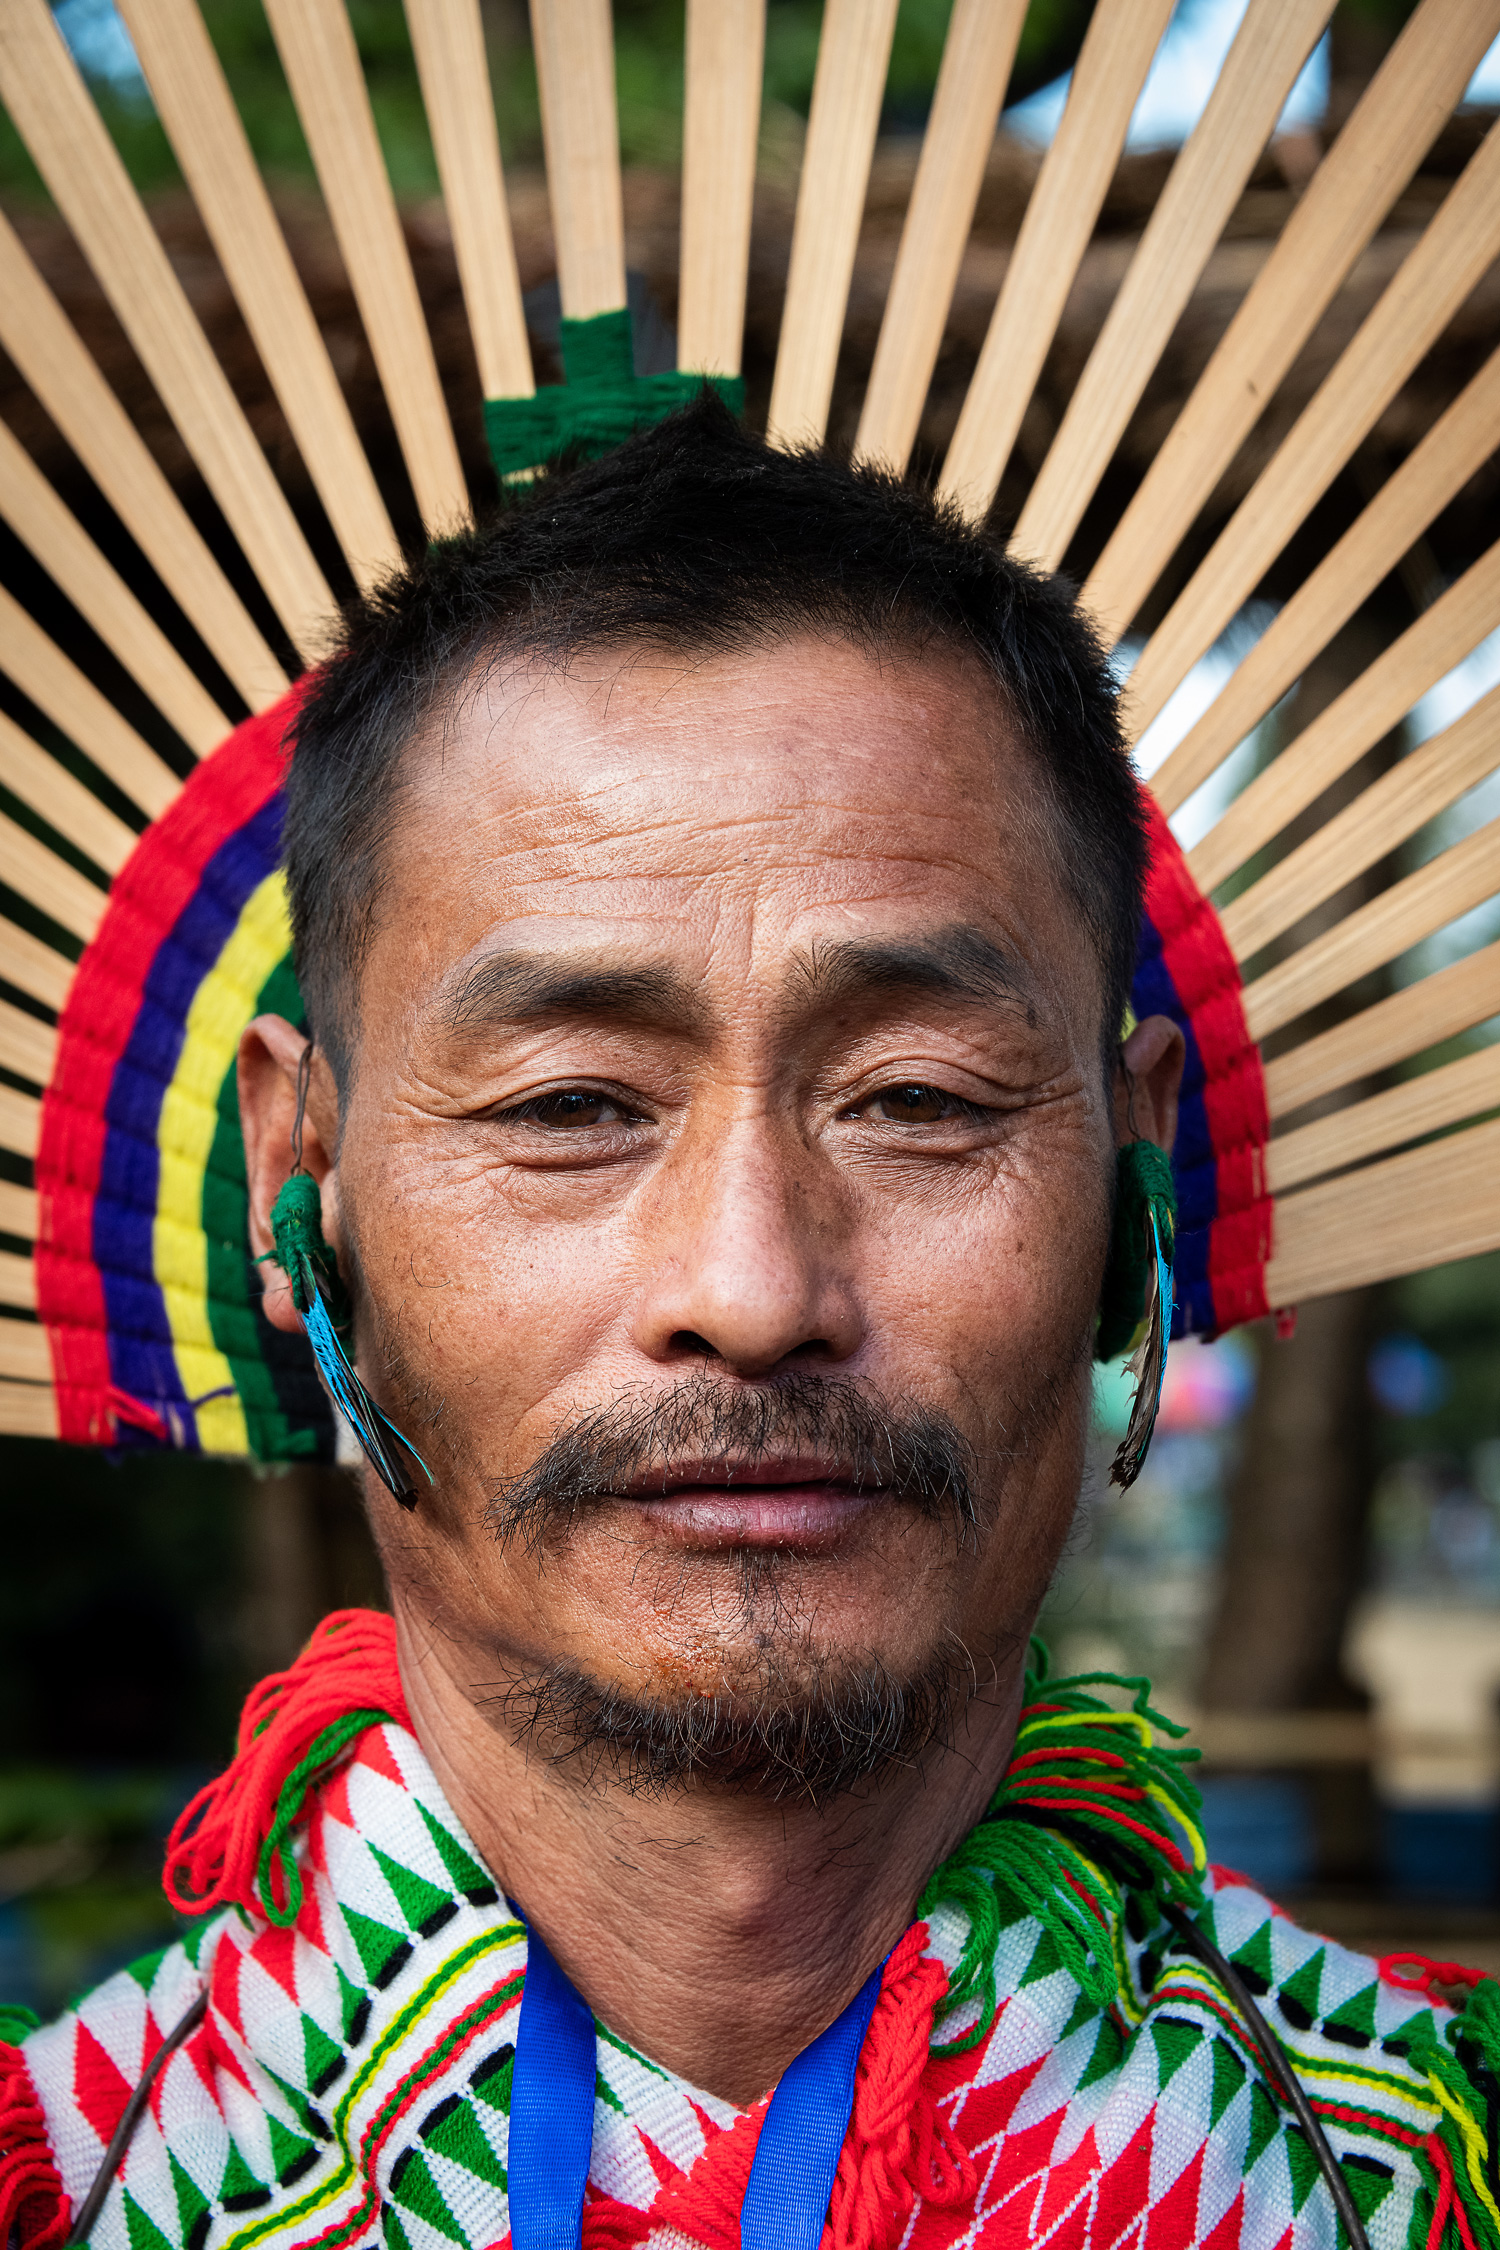 A Naga tribal with colorful headgear